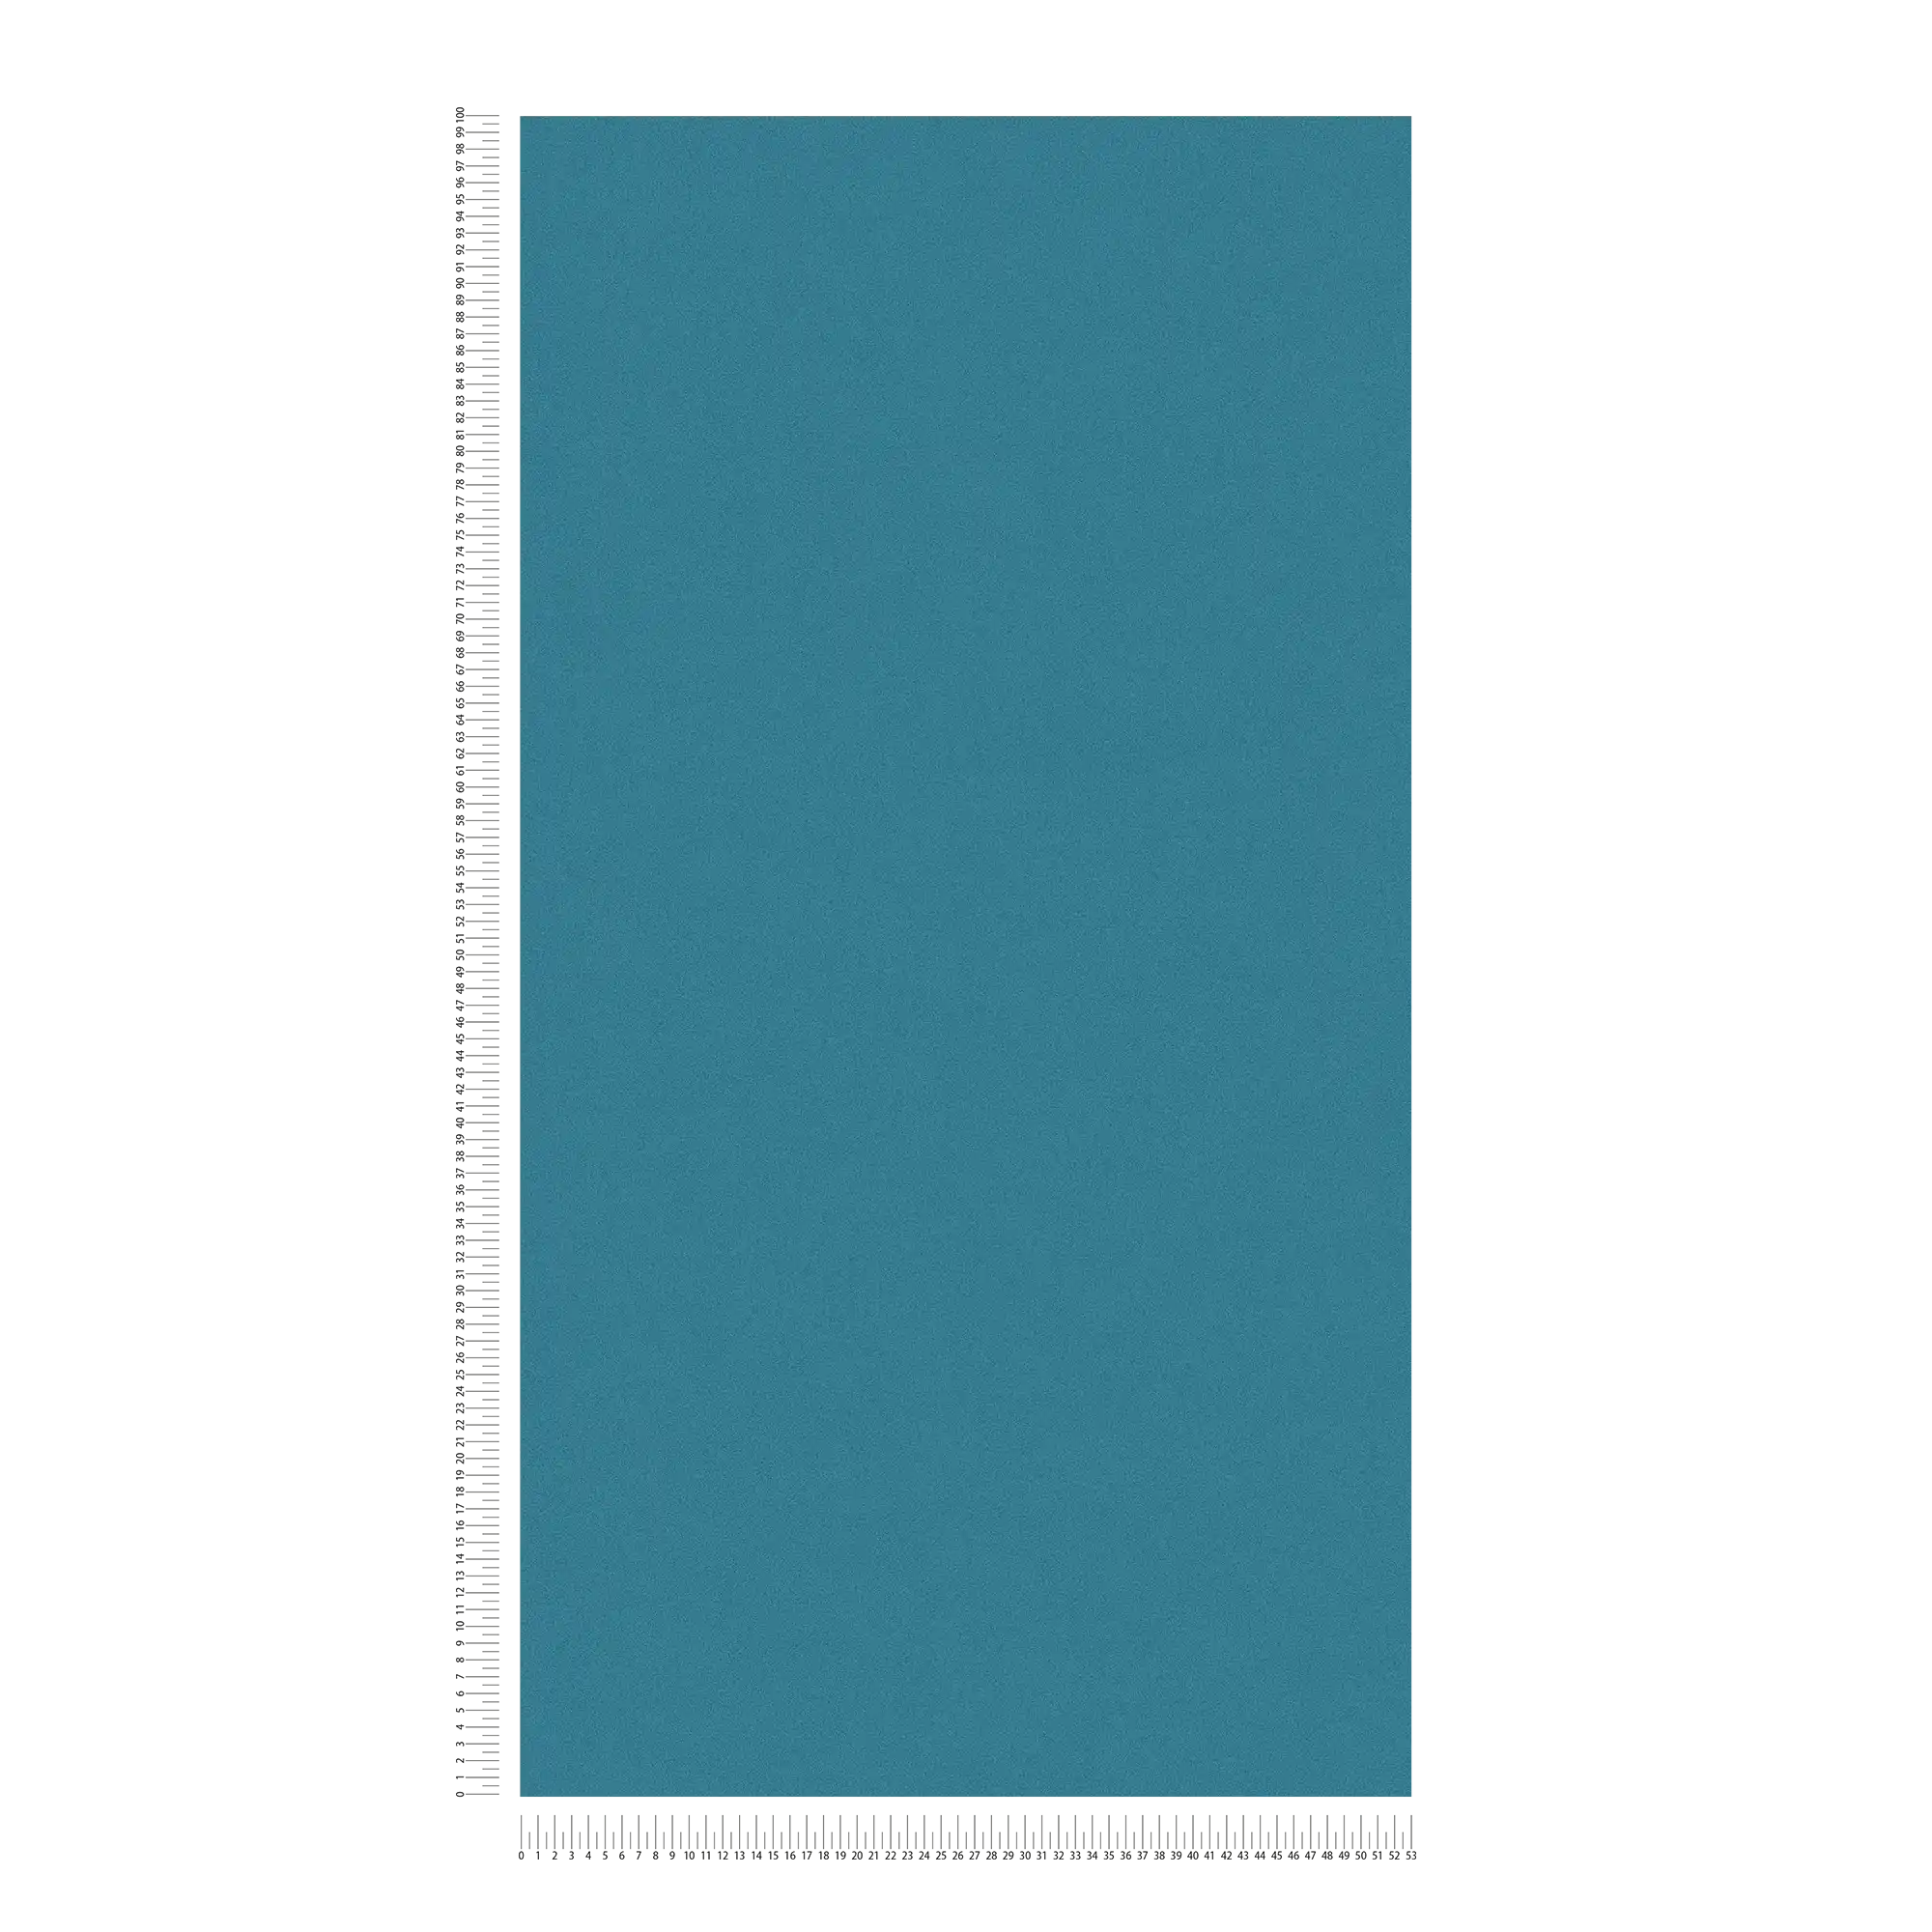             wallpaper dark blue turquoise, satin gloss & texture pattern
        